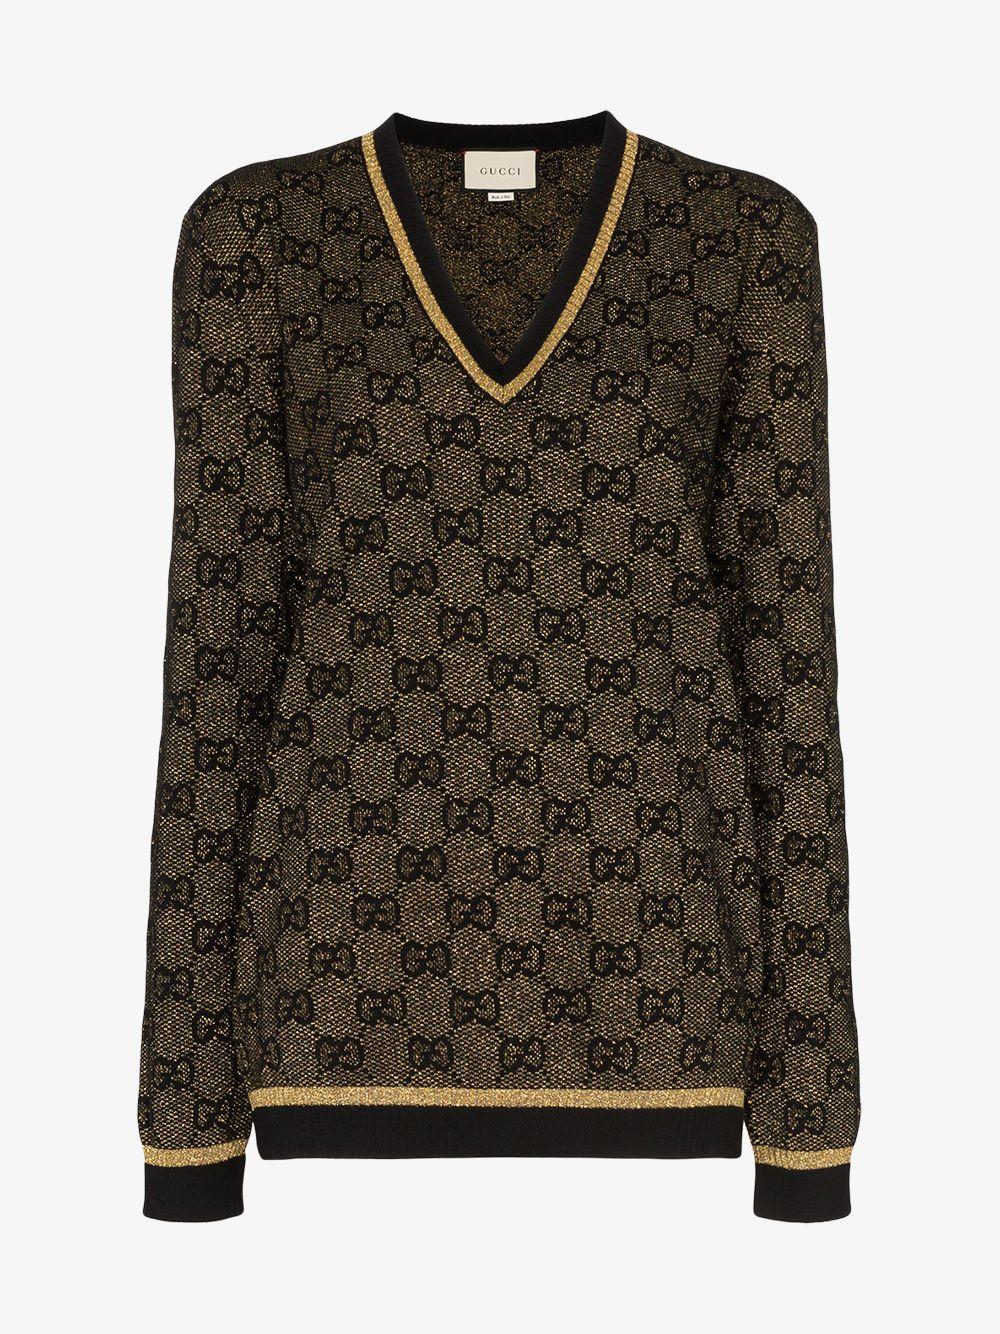 Gucci Wool V-neck Lurex Knit GG Sweater in Black | Lyst